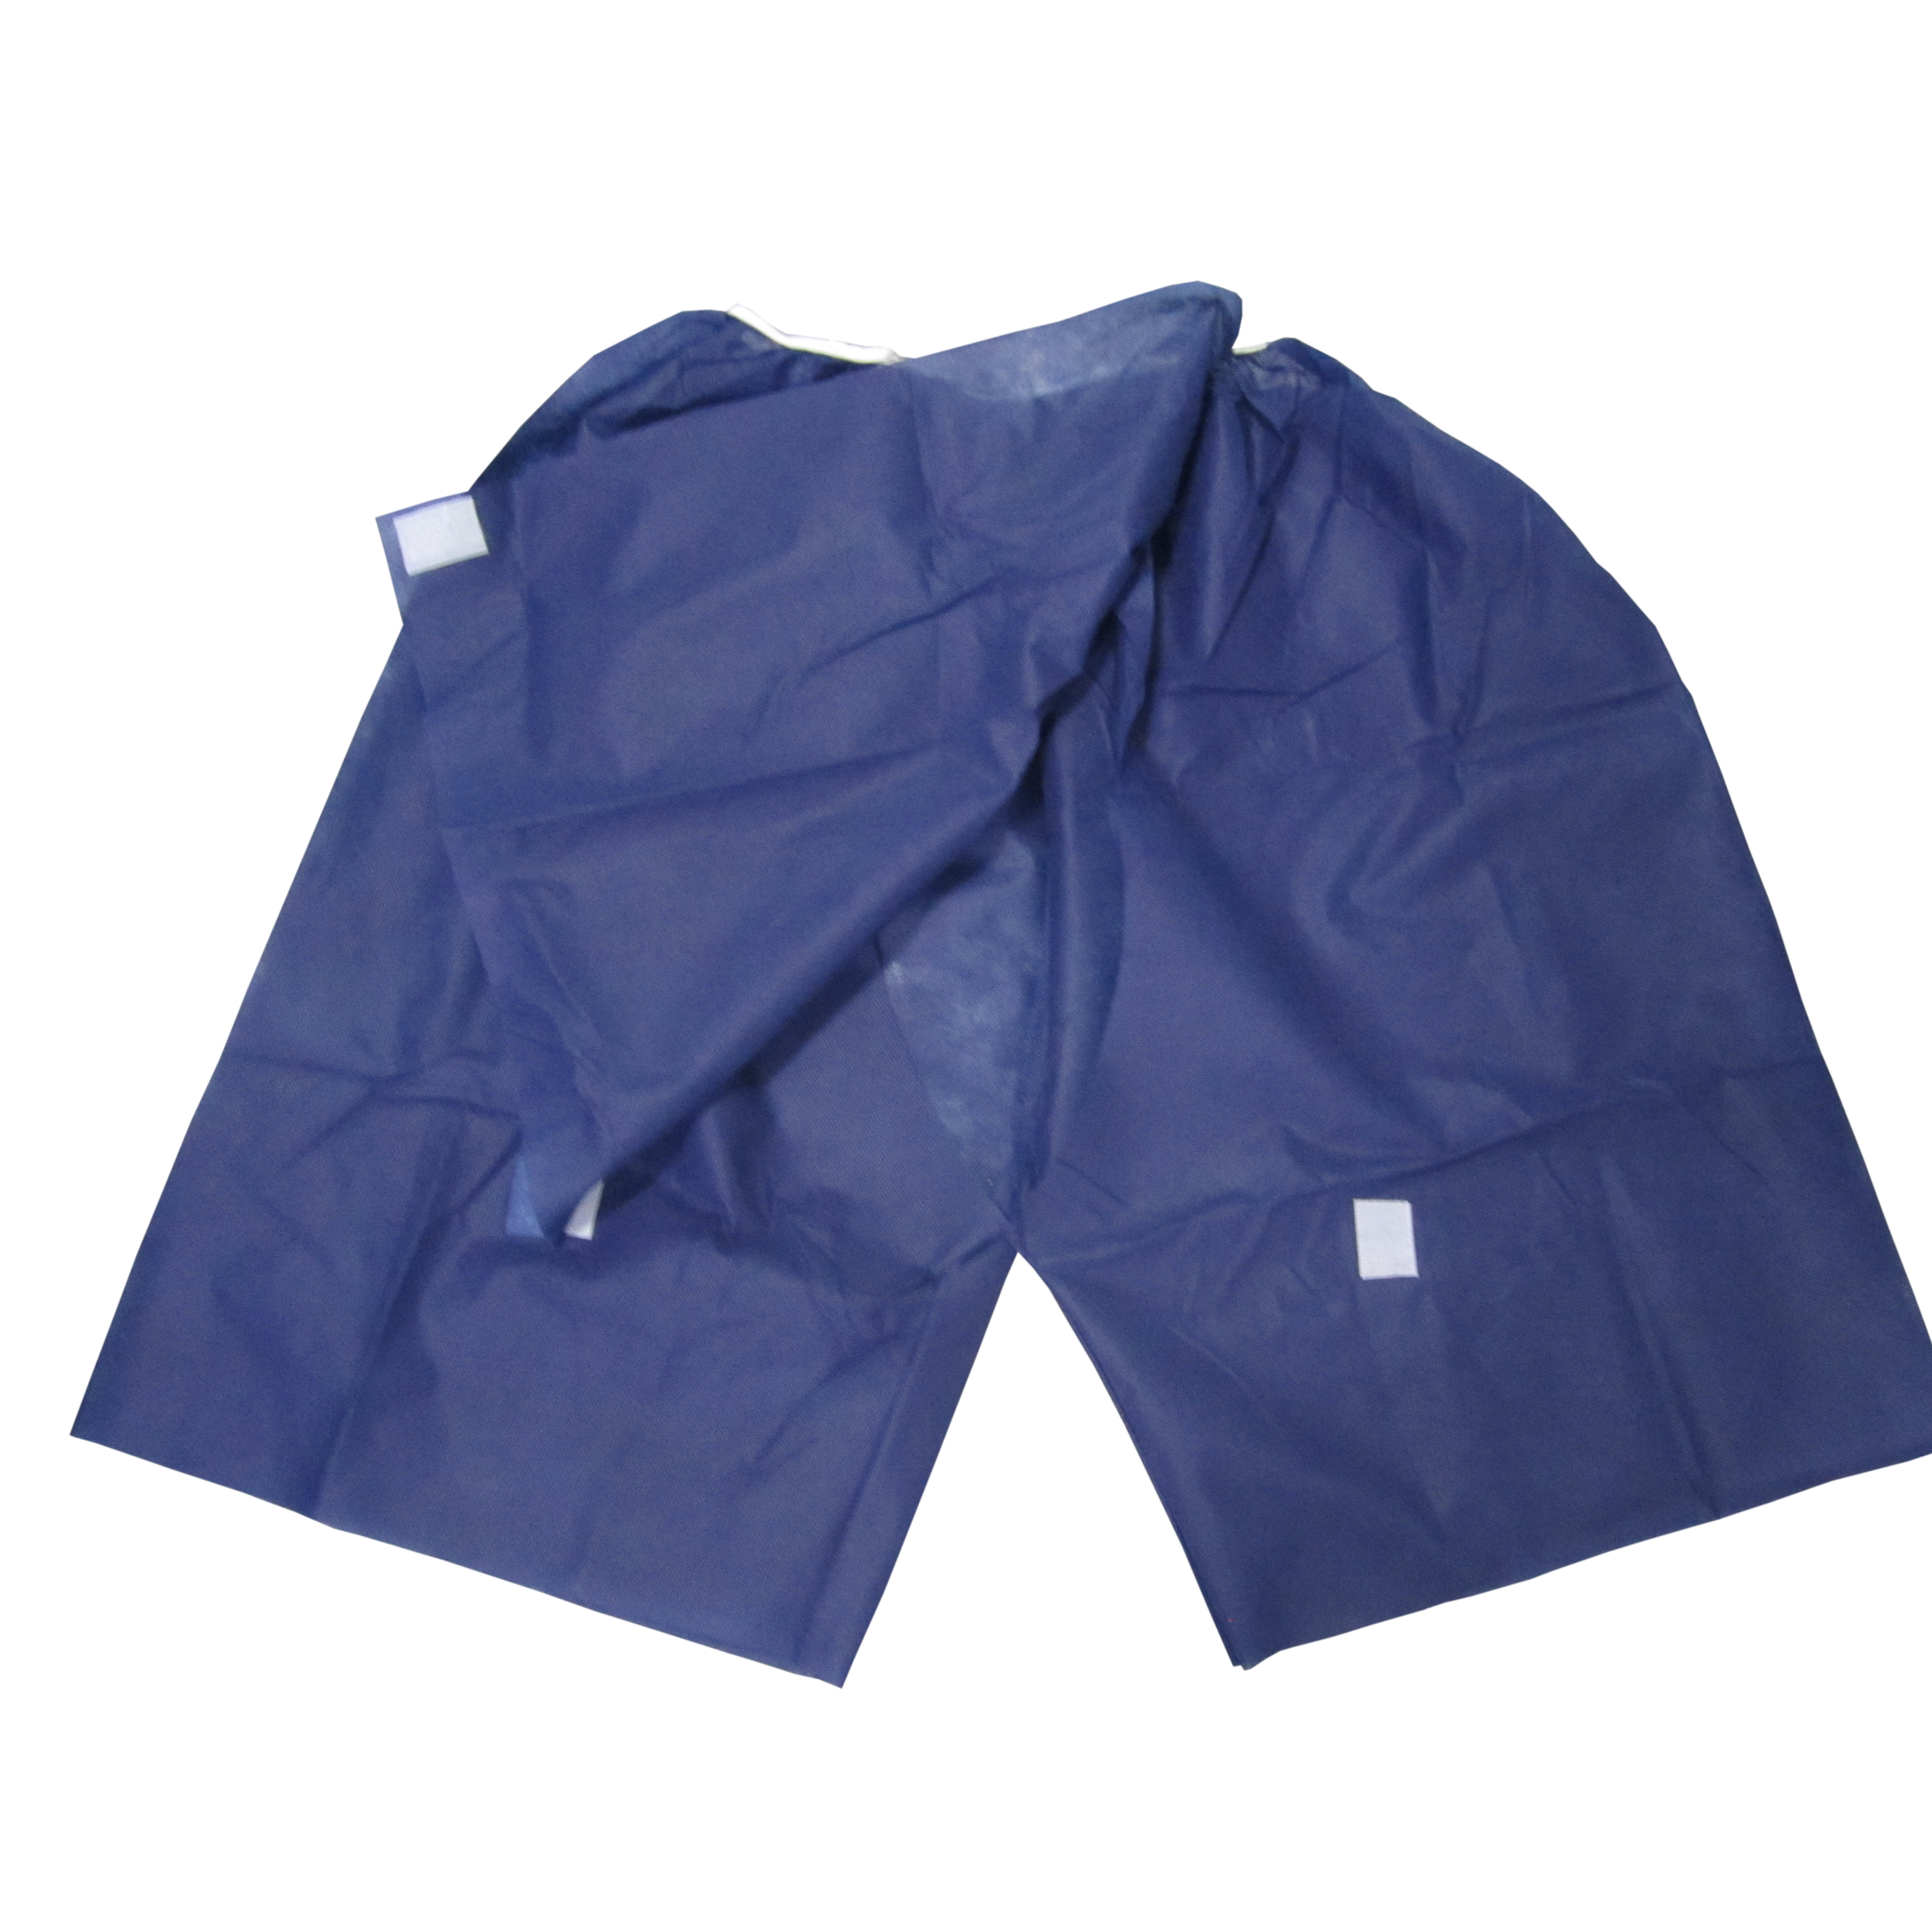 disposable underwear pp non woven Underpants Disposable men's short for massage hospital examination clinic